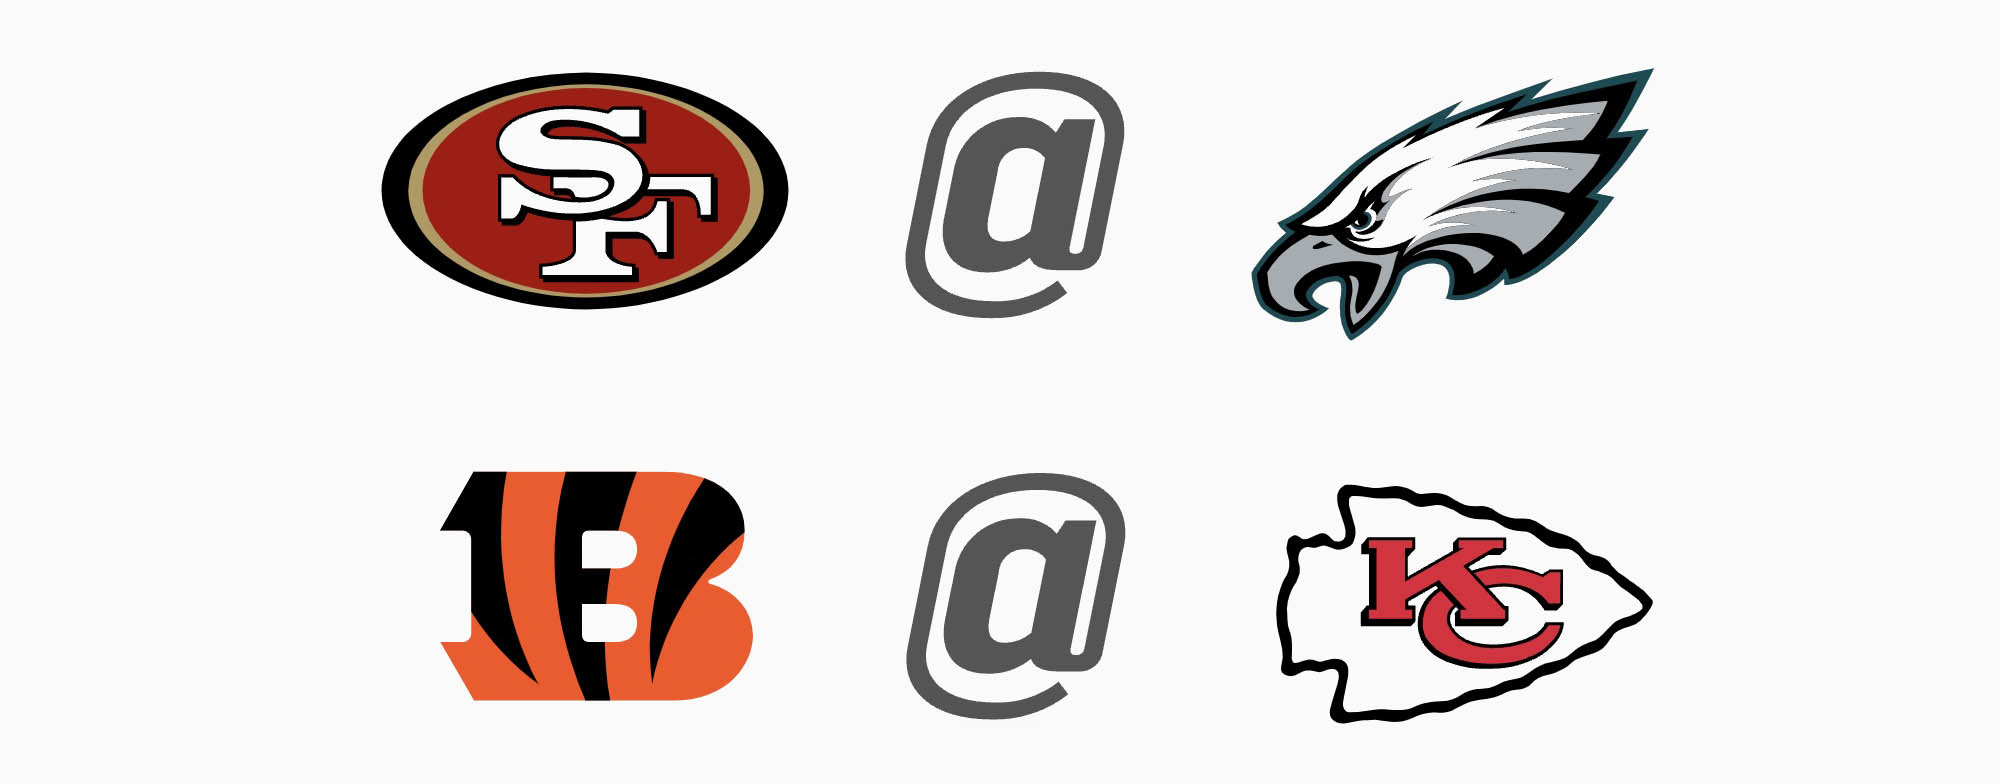 2022/2023 NFL Conference Championship team logos